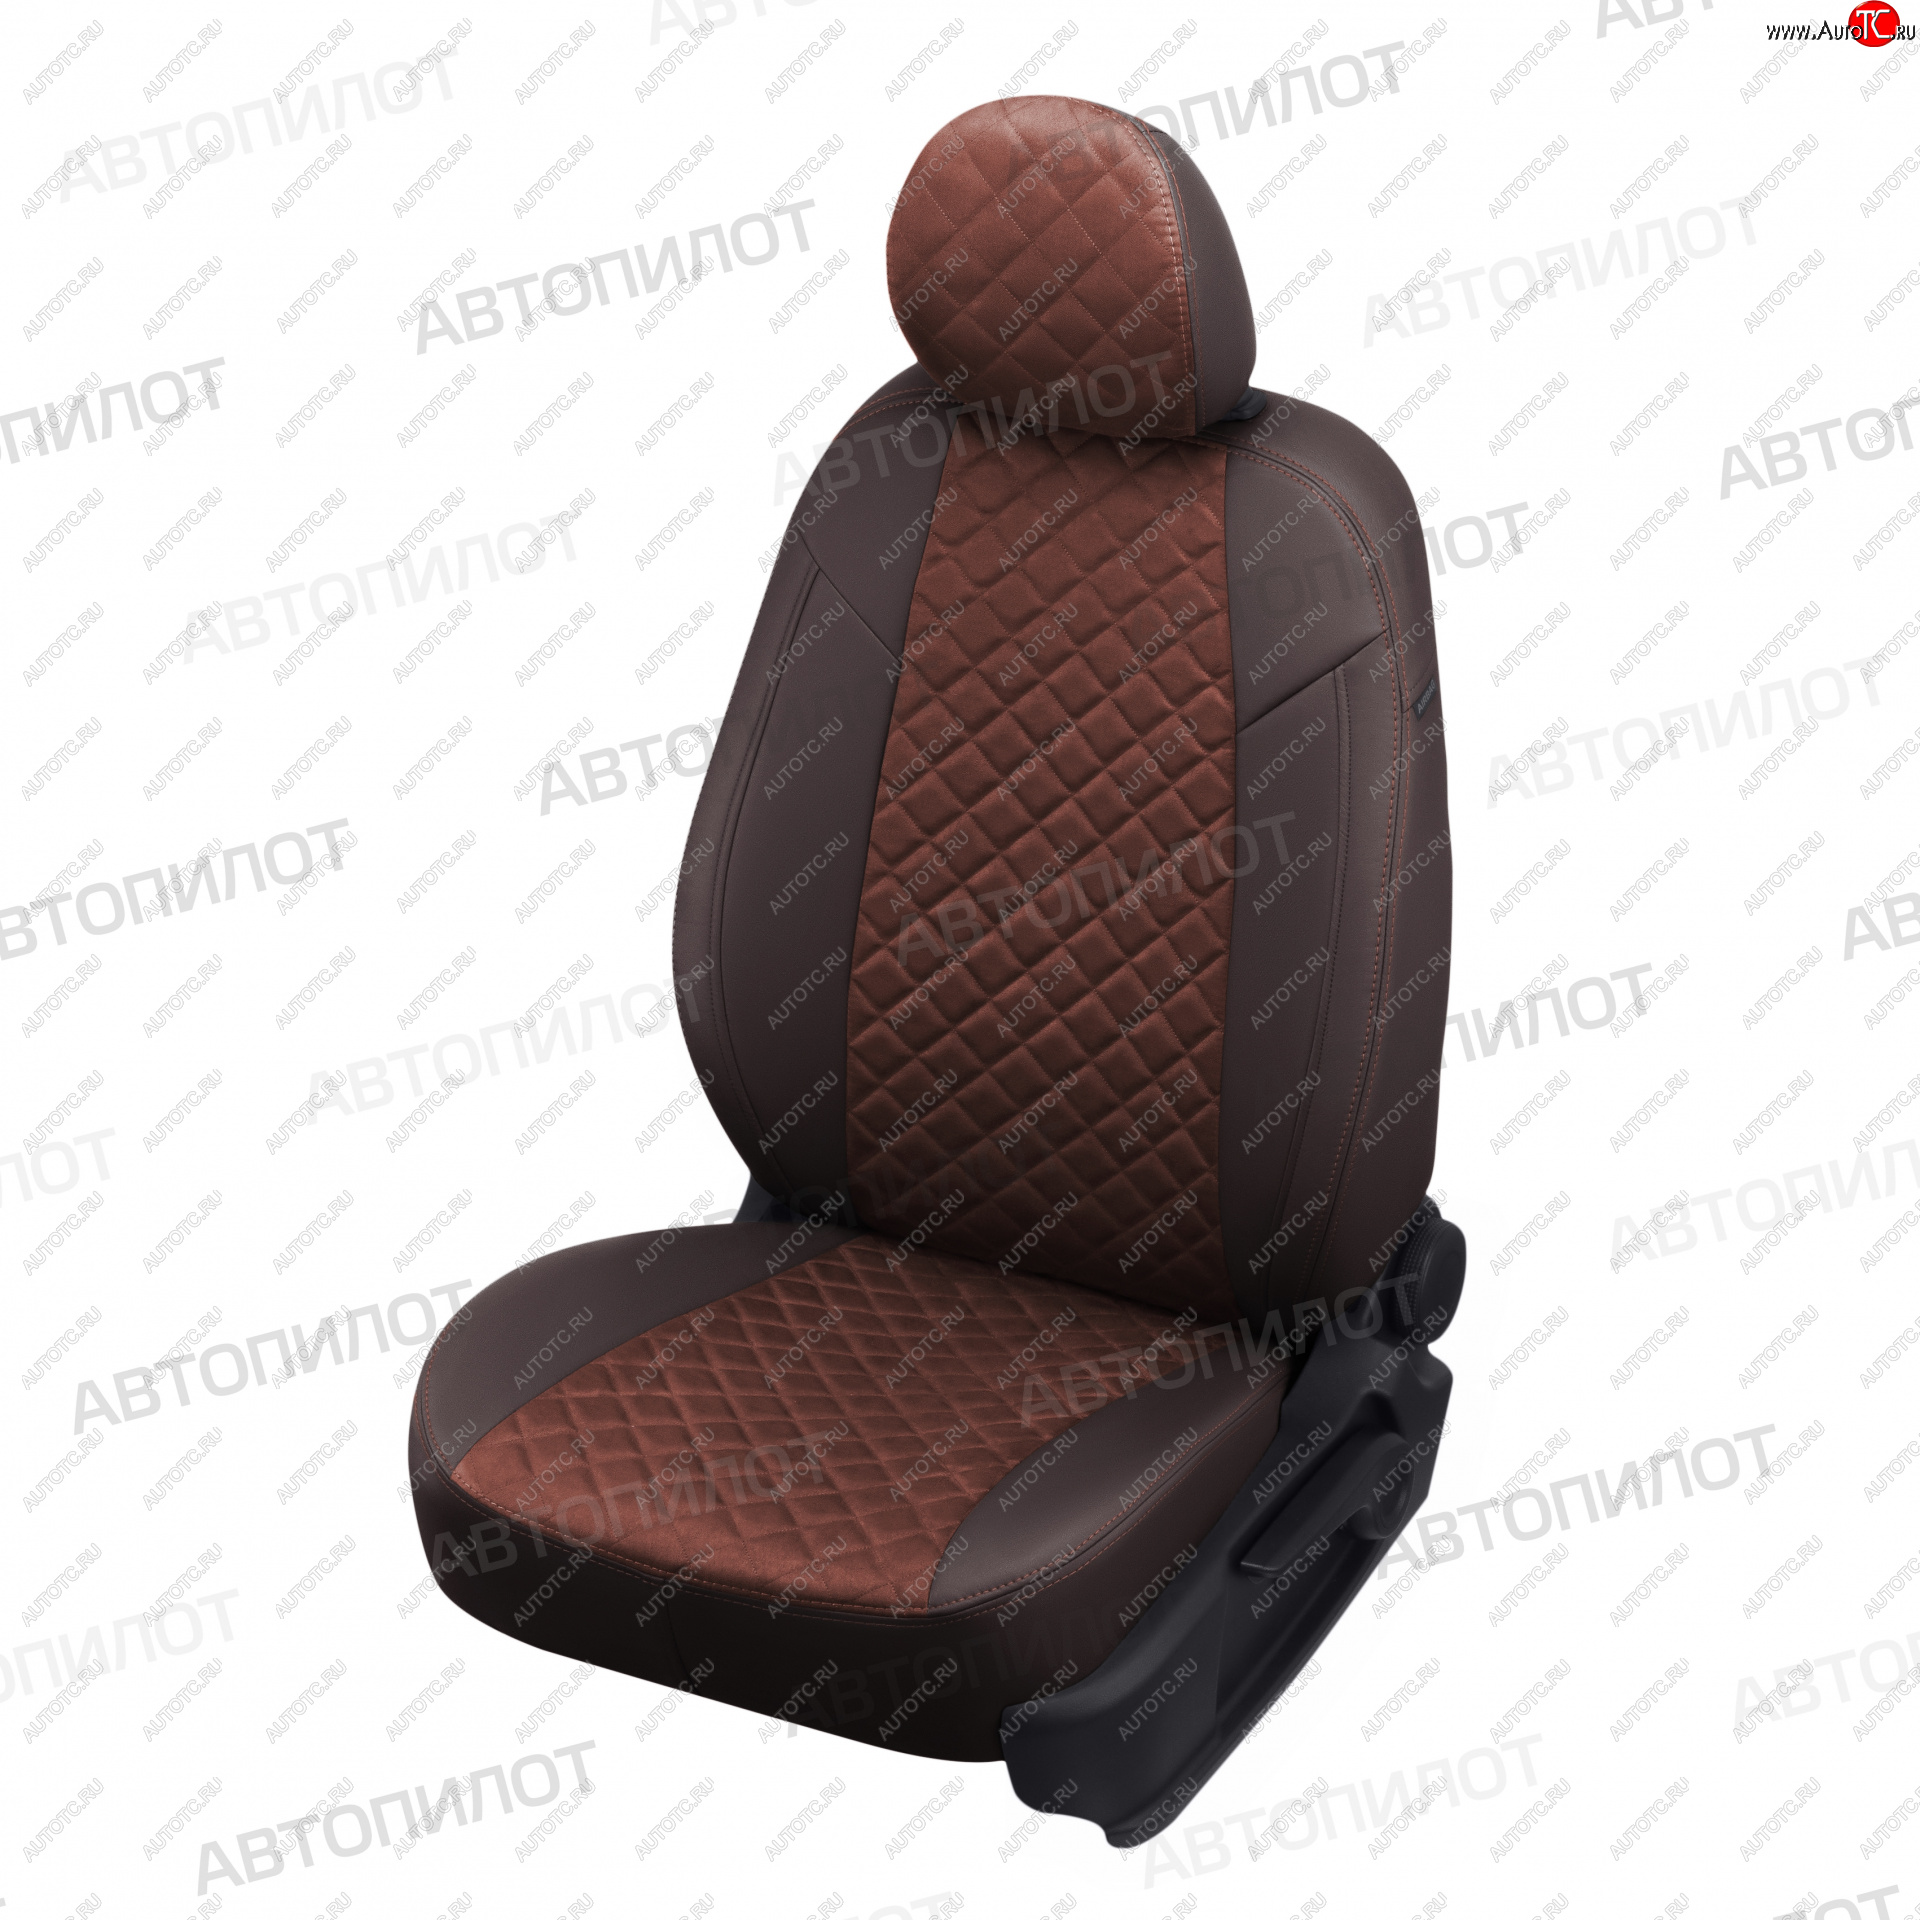 13 999 р. Чехлы сидений (экокожа/алькантара, 40/60) Автопилот Ромб  Audi A6  C5 (1997-2004) (шоколад)